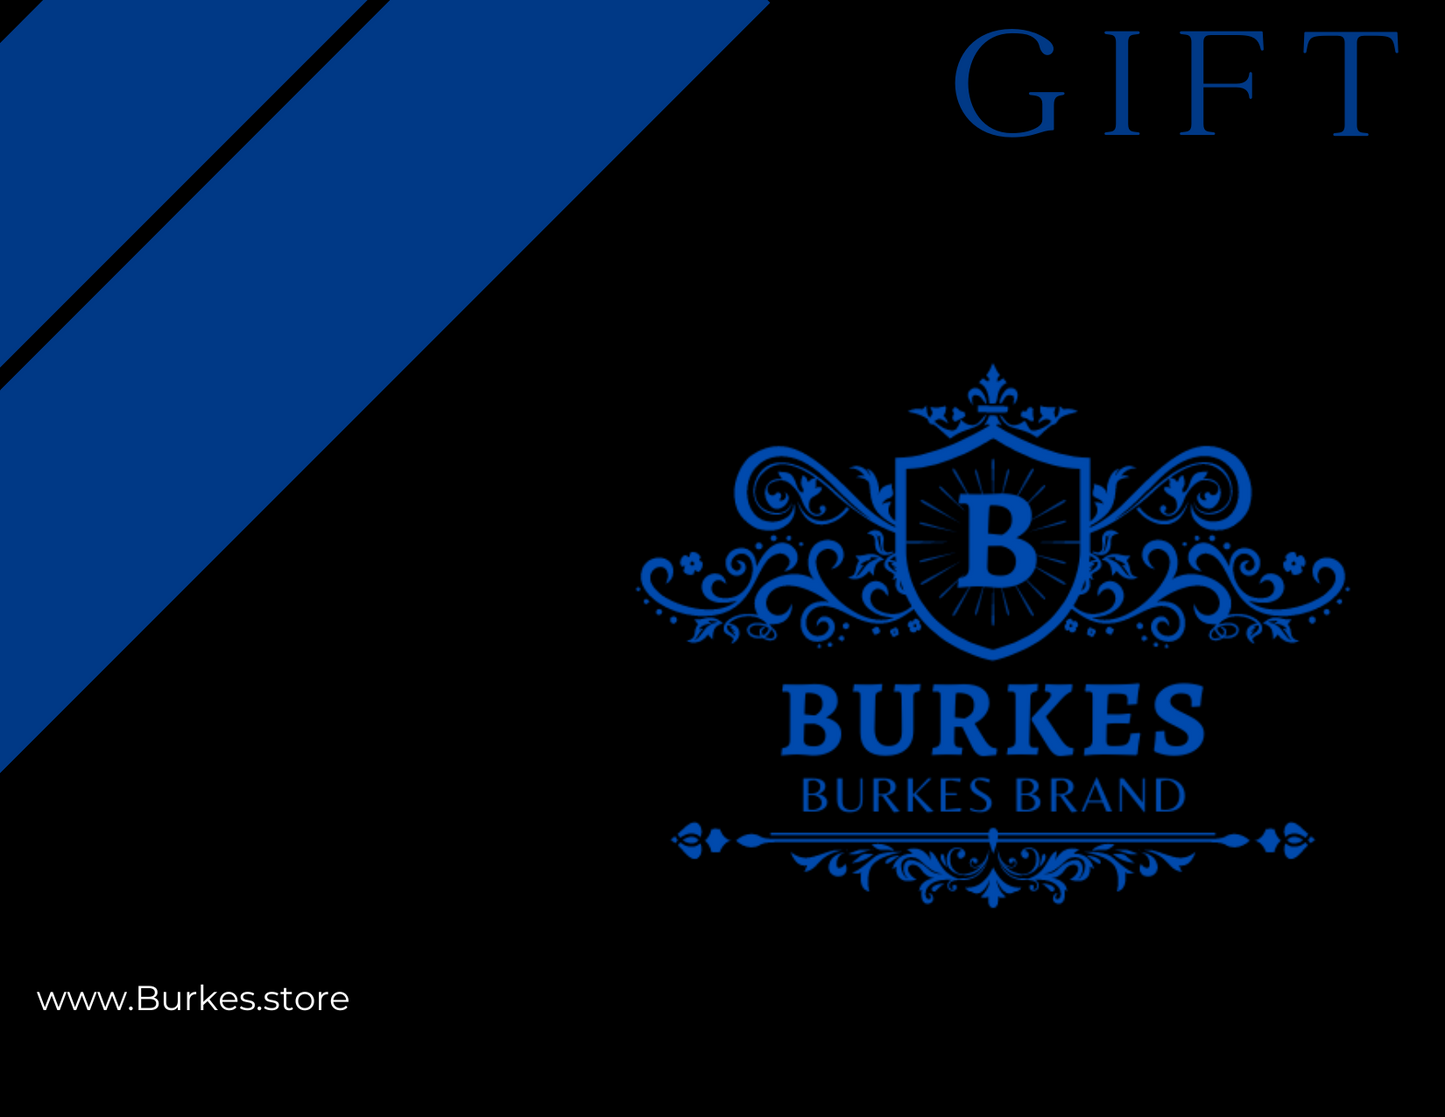 Burkes gift card